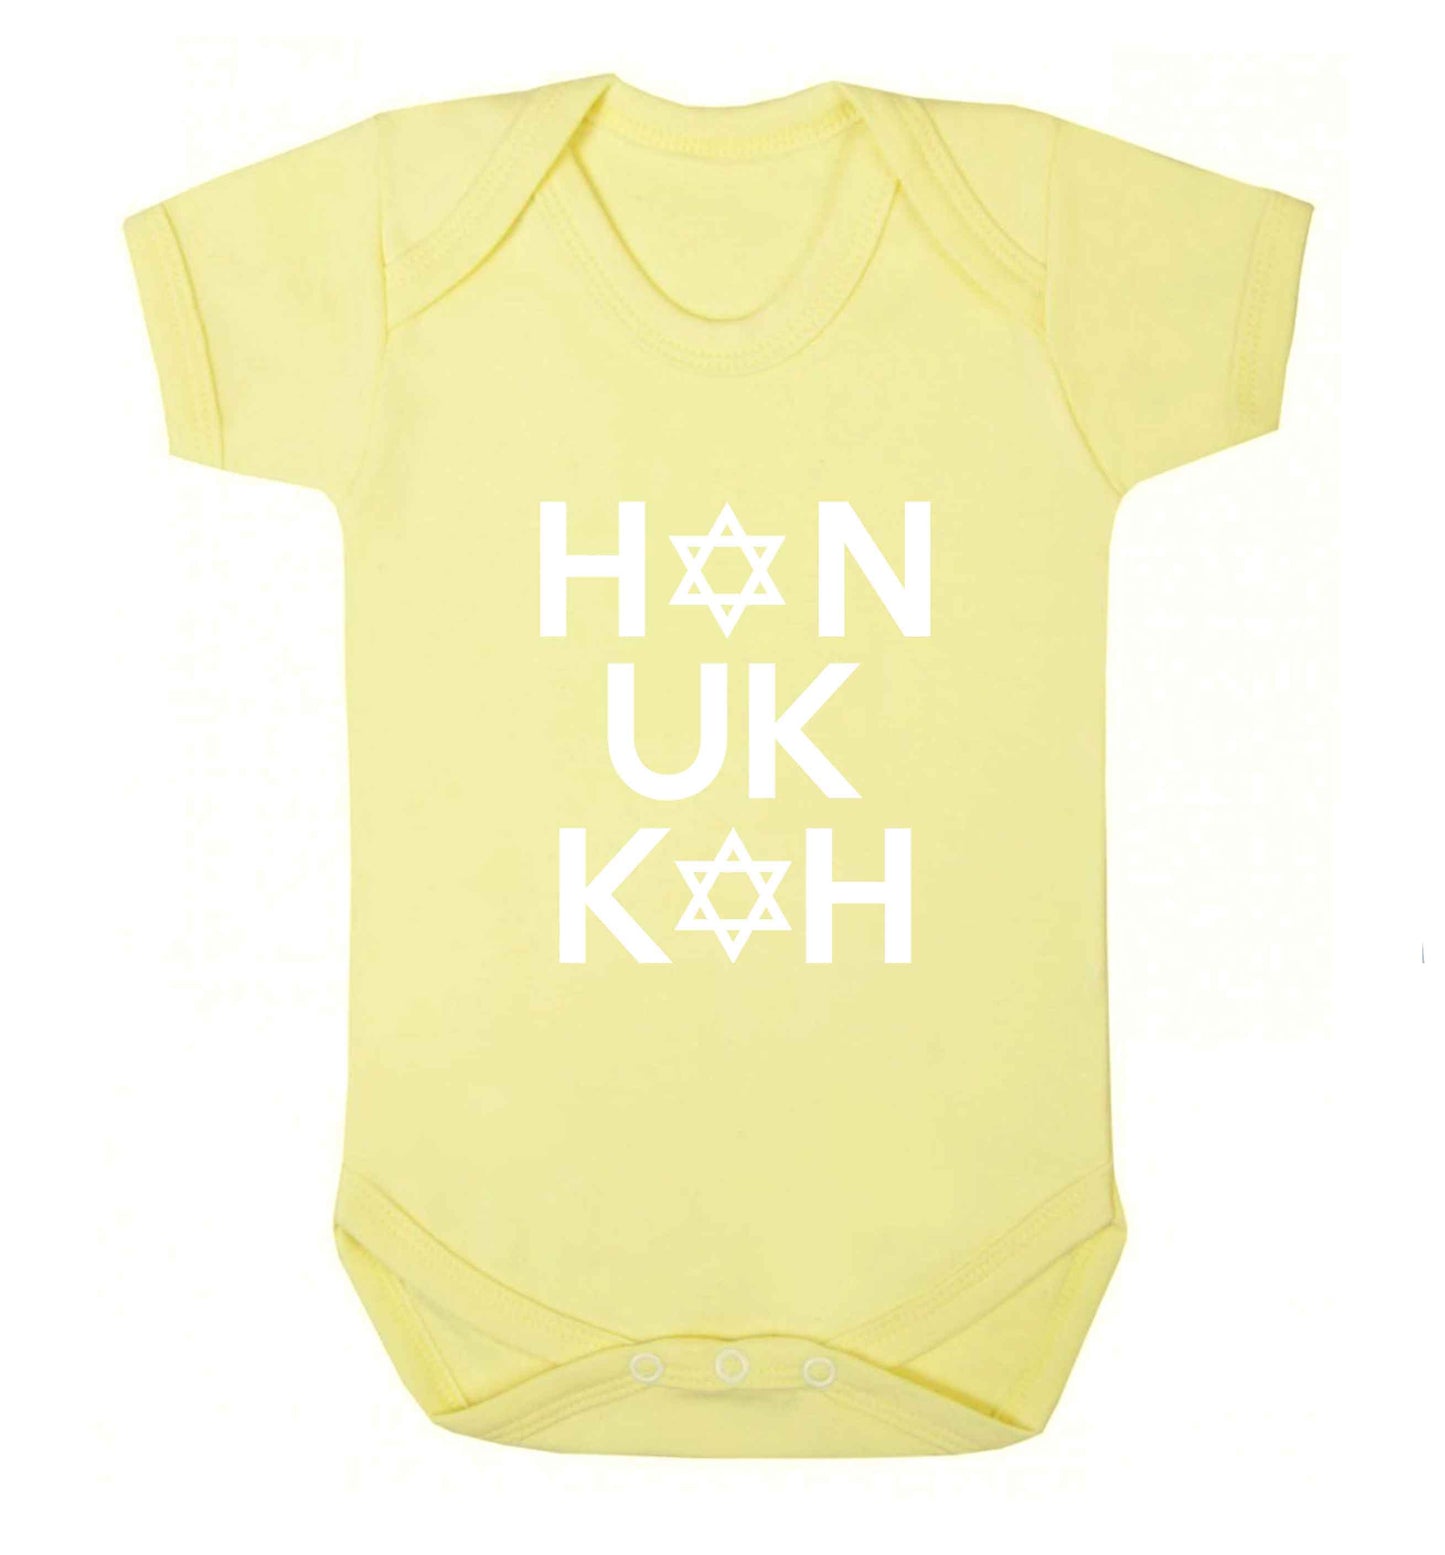 Han uk kah  Hanukkah star of david baby vest pale yellow 18-24 months